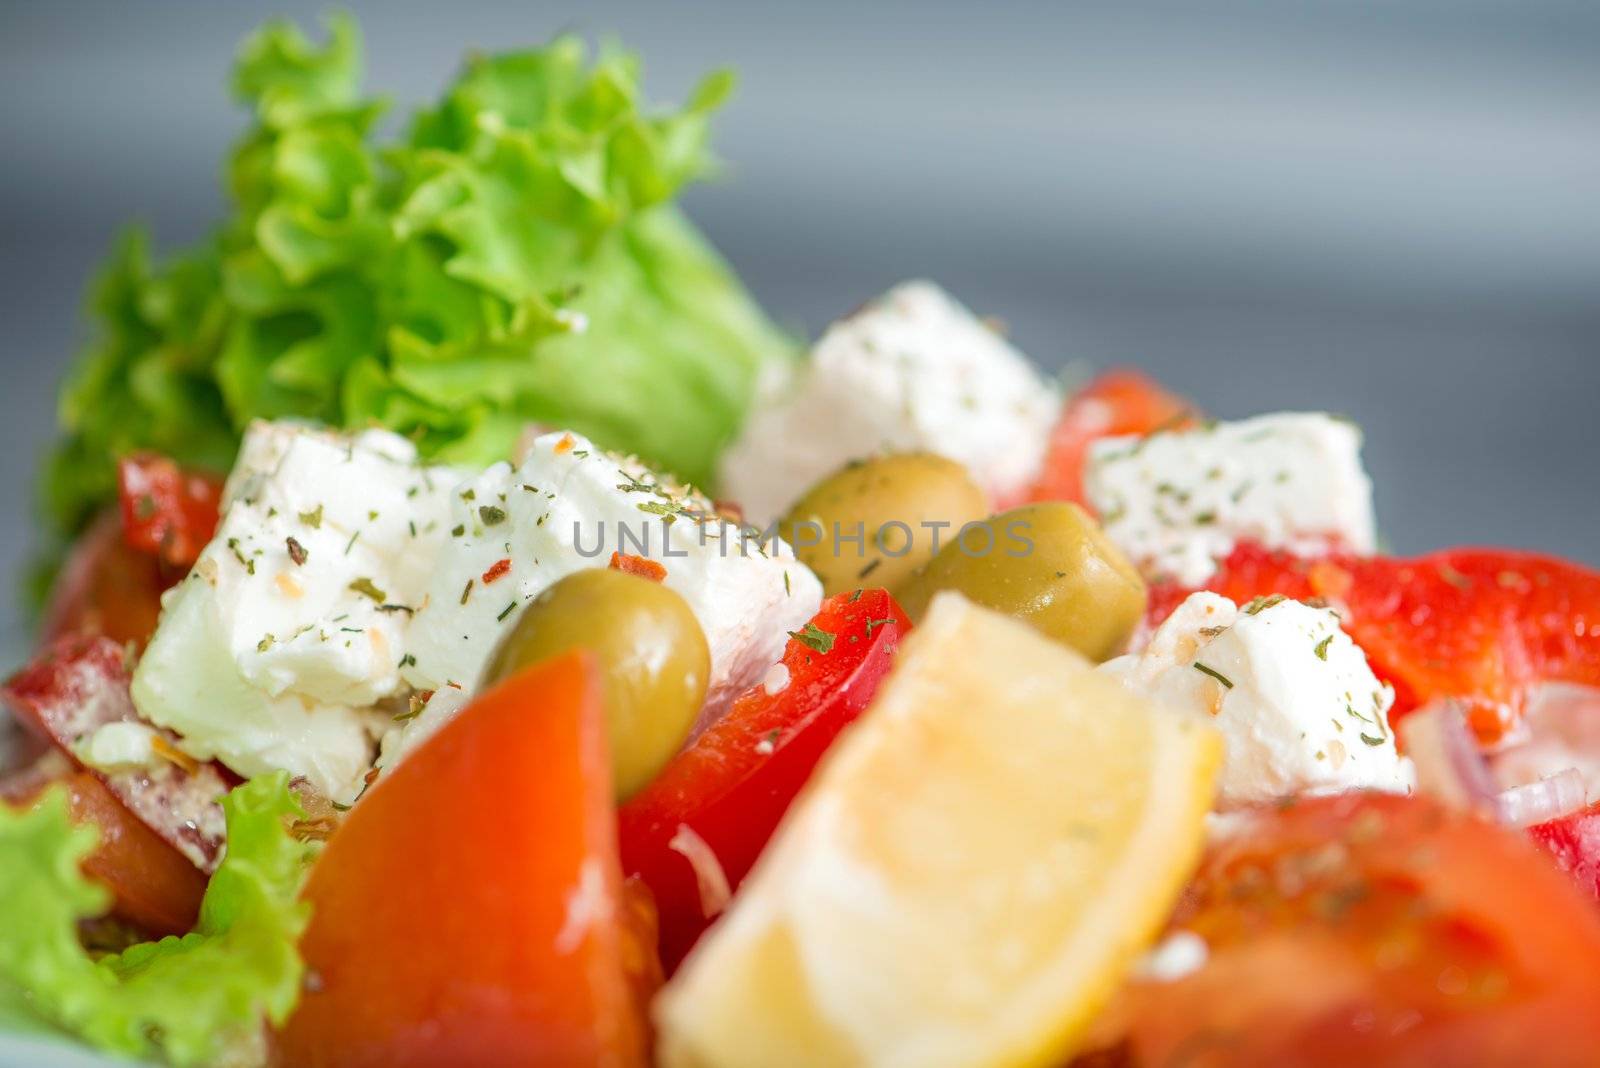 Tasty Greek salad on a plate with lemon